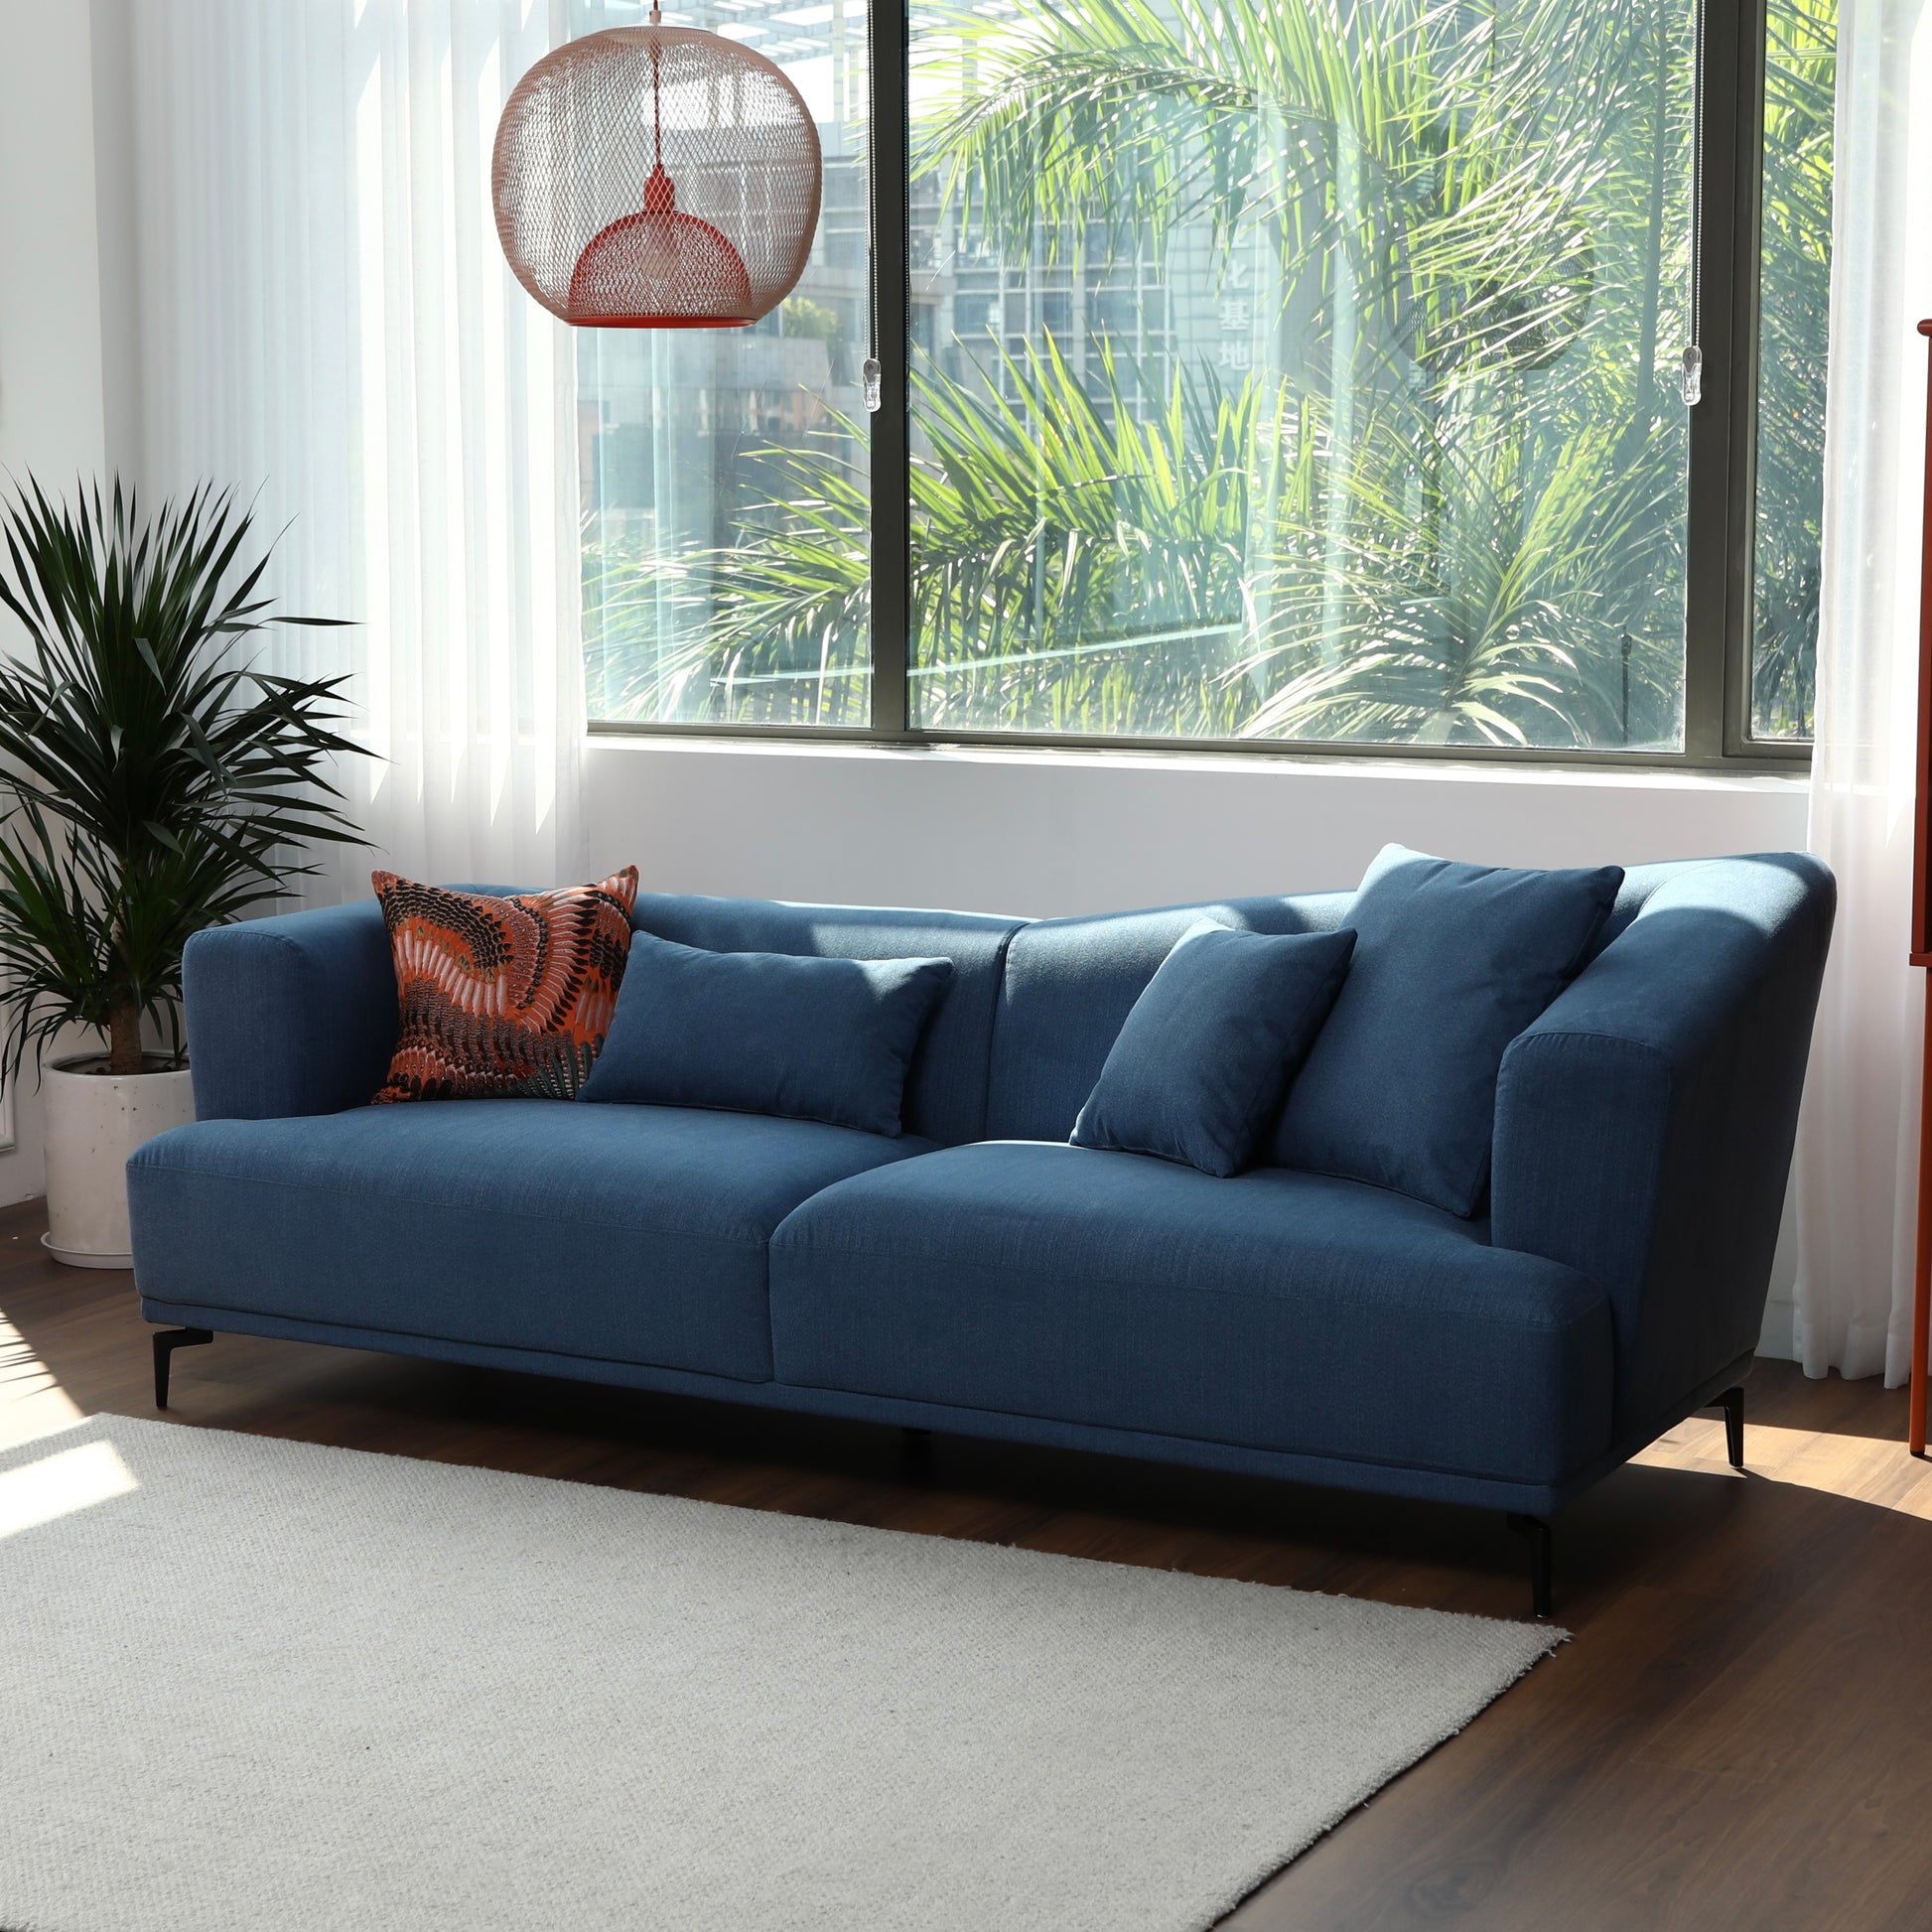 Miami sofa 2 Seater - Blue 